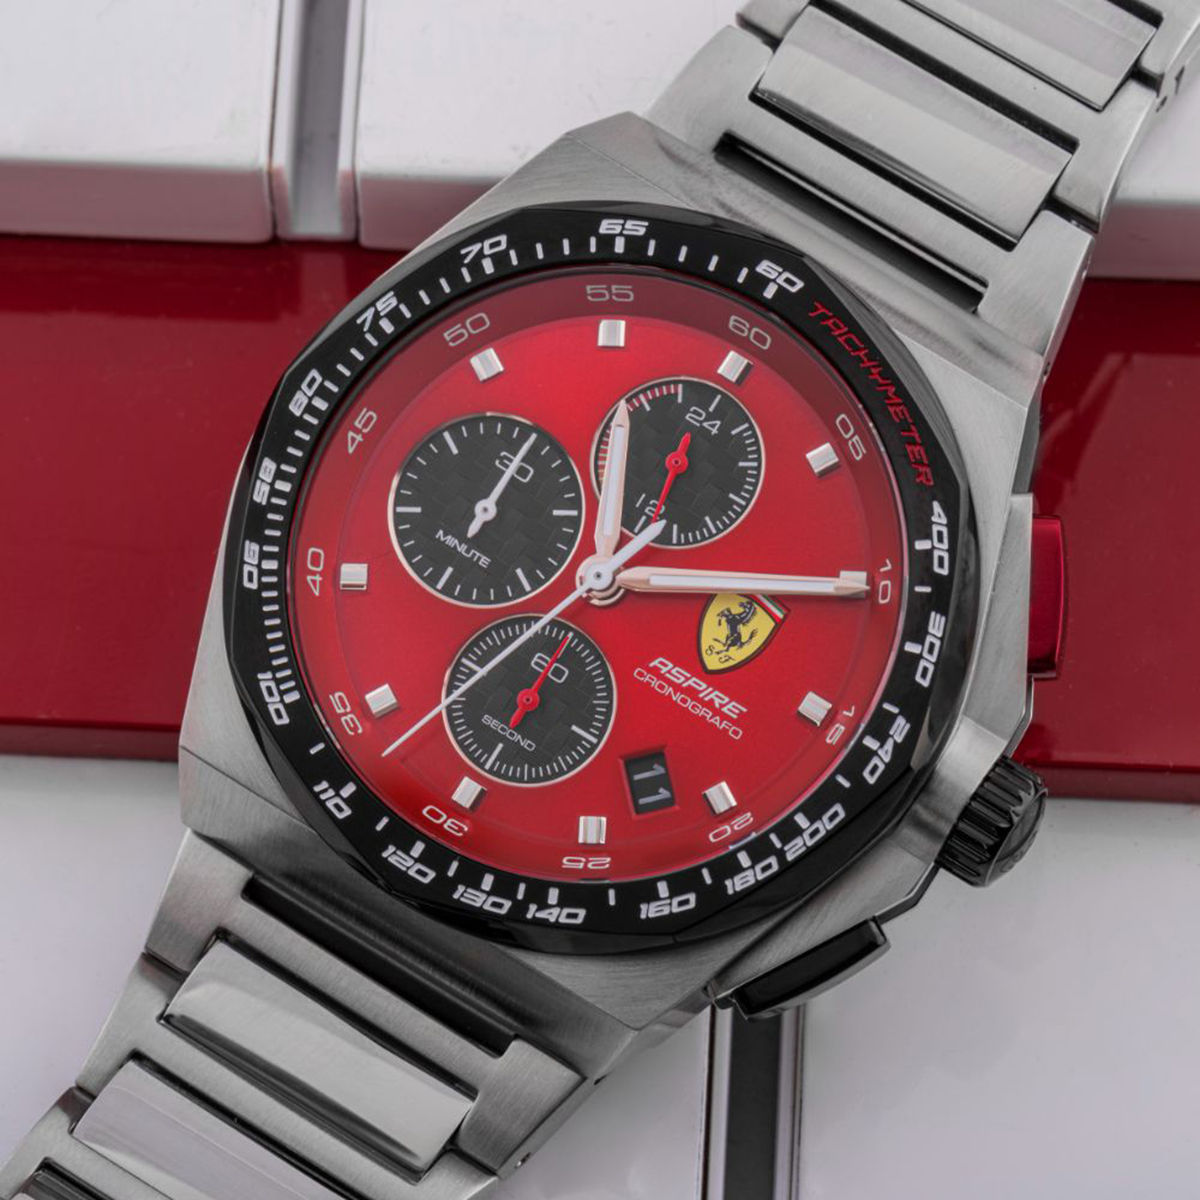 Scuderia Ferrari Aspire Max 0830790 Red Dial Watch For Men: Buy ...